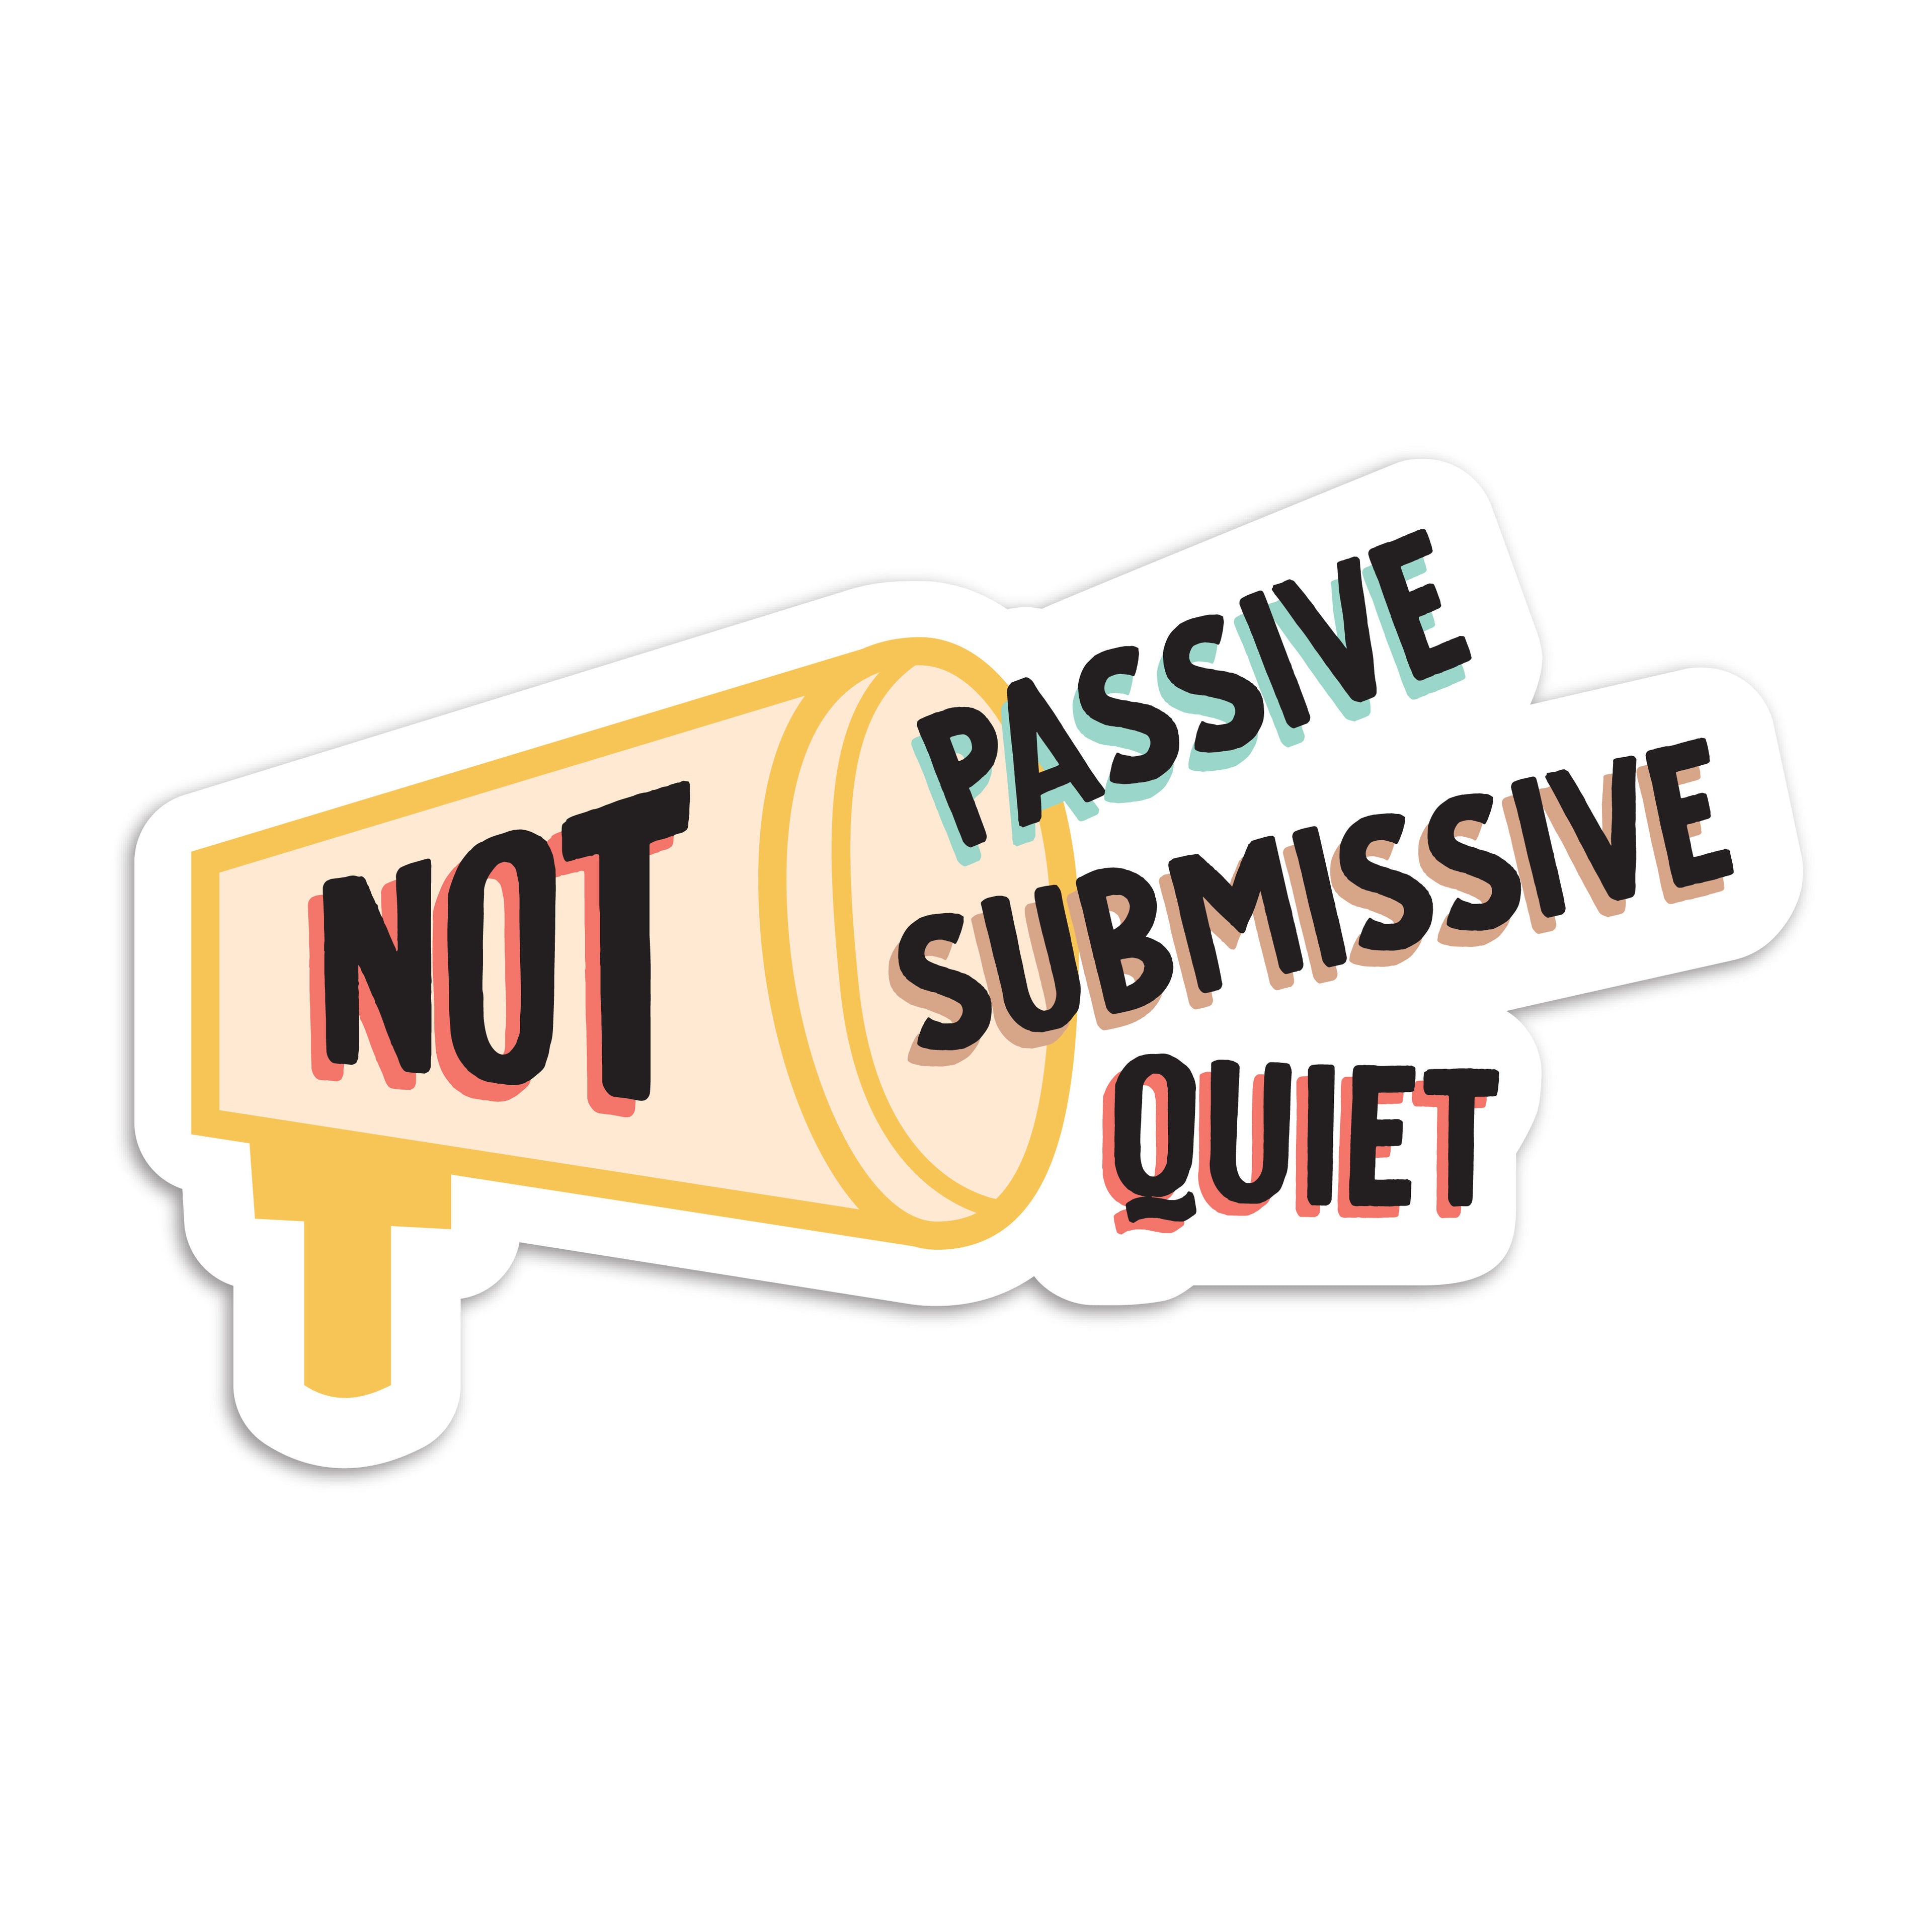 Not passive, submissive, quiet vinyl sticker by I&